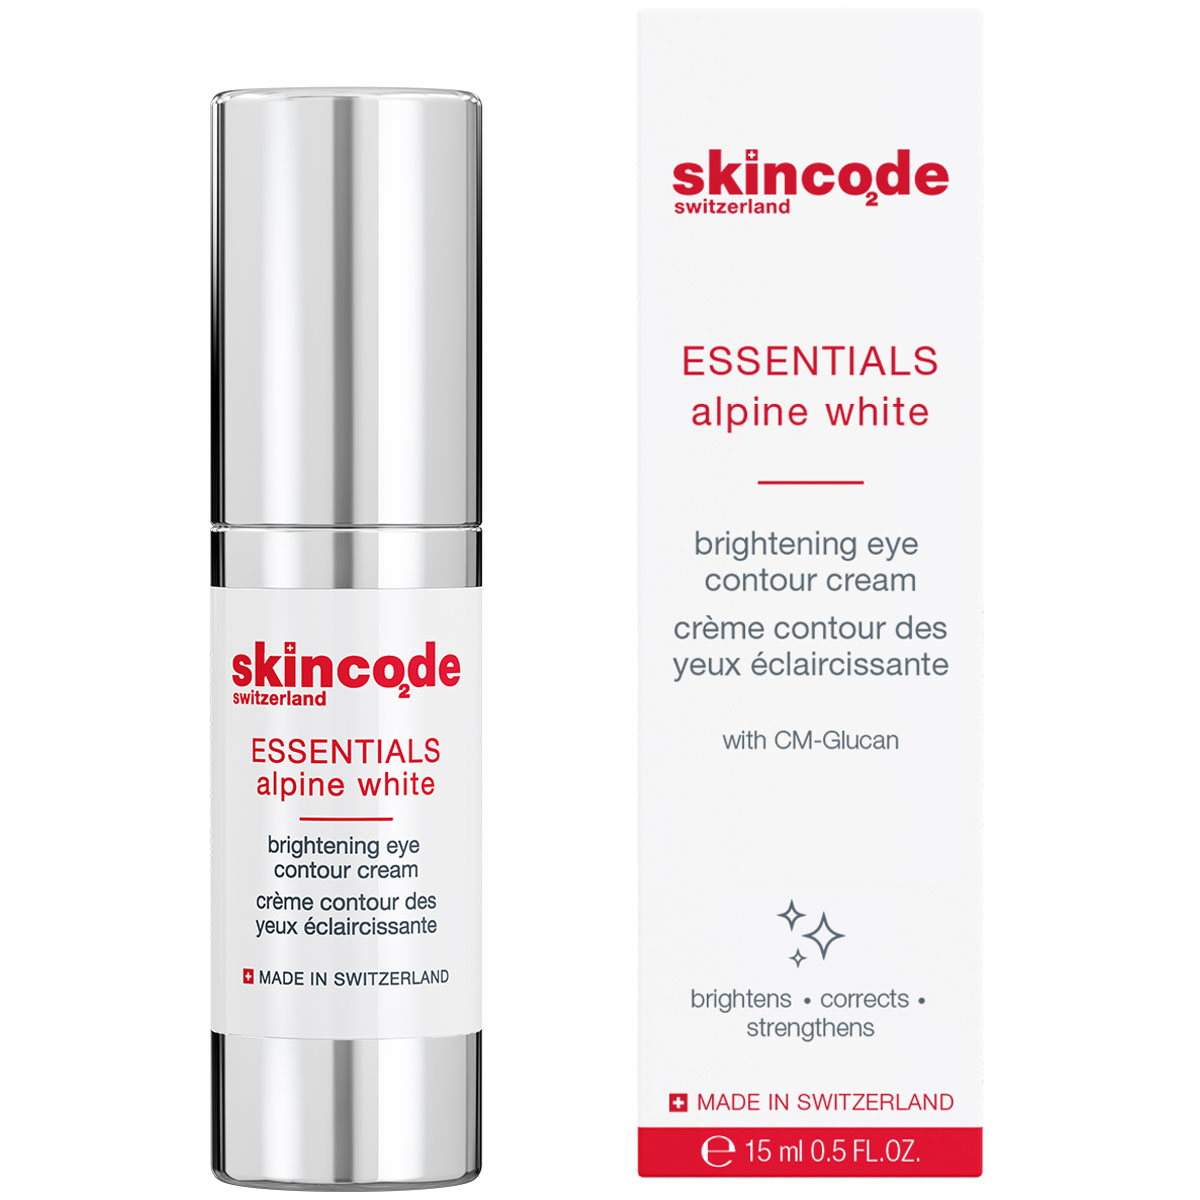 Skincode Осветляющий крем для контура глаз, 15 мл (Skincode, Essentials Alpine White) крем для контура глаз осветляющий skincode 15 мл